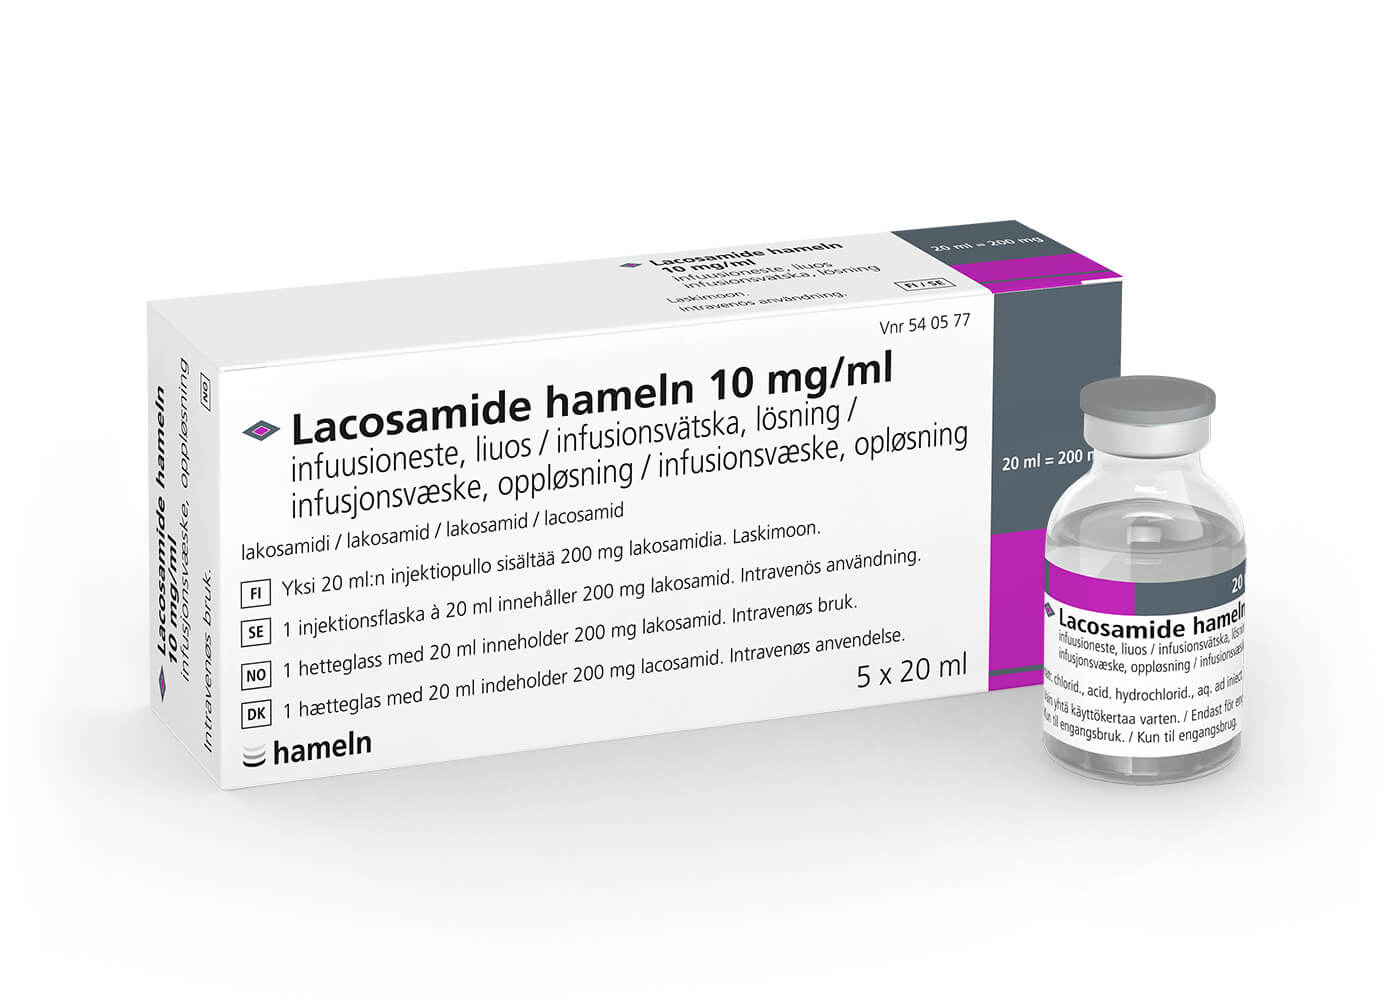 Lacosamide_DK-FI-SE-NO_10_mg-ml_in_20_ml_Pack-Vial_5St_Anfarm_2023-27